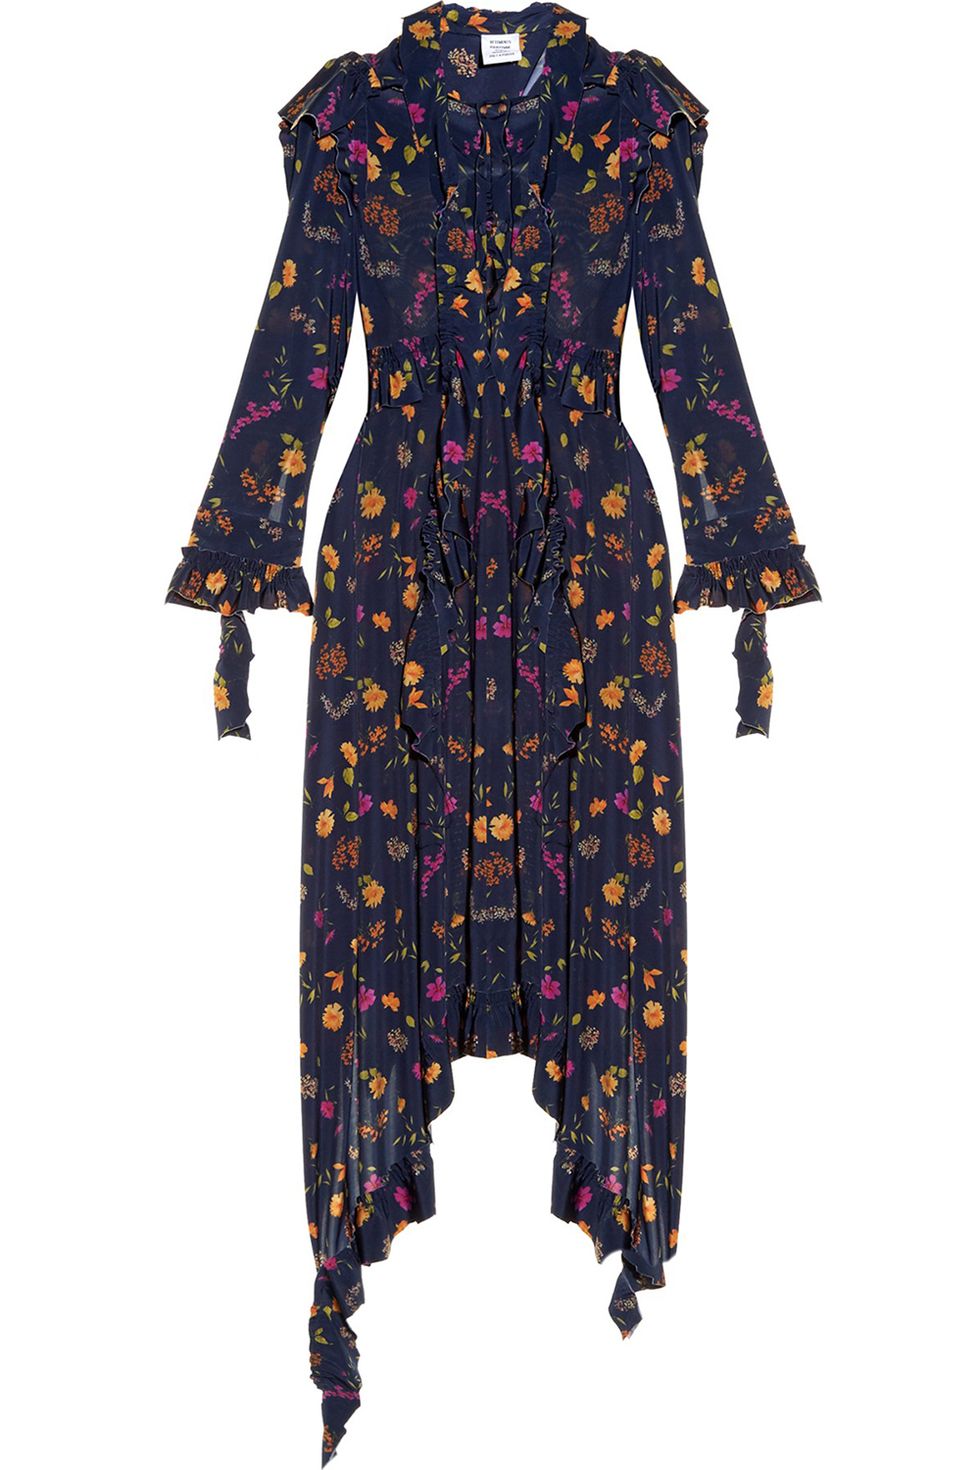 <p><em>Vetements dress, $2,265, <a href="http://www.matchesfashion.com/us/products/Vetements-Ruffle-shoulder-floral-print-dress-1065795" target="_blank">matchesfashion.com</a>.</em></p>